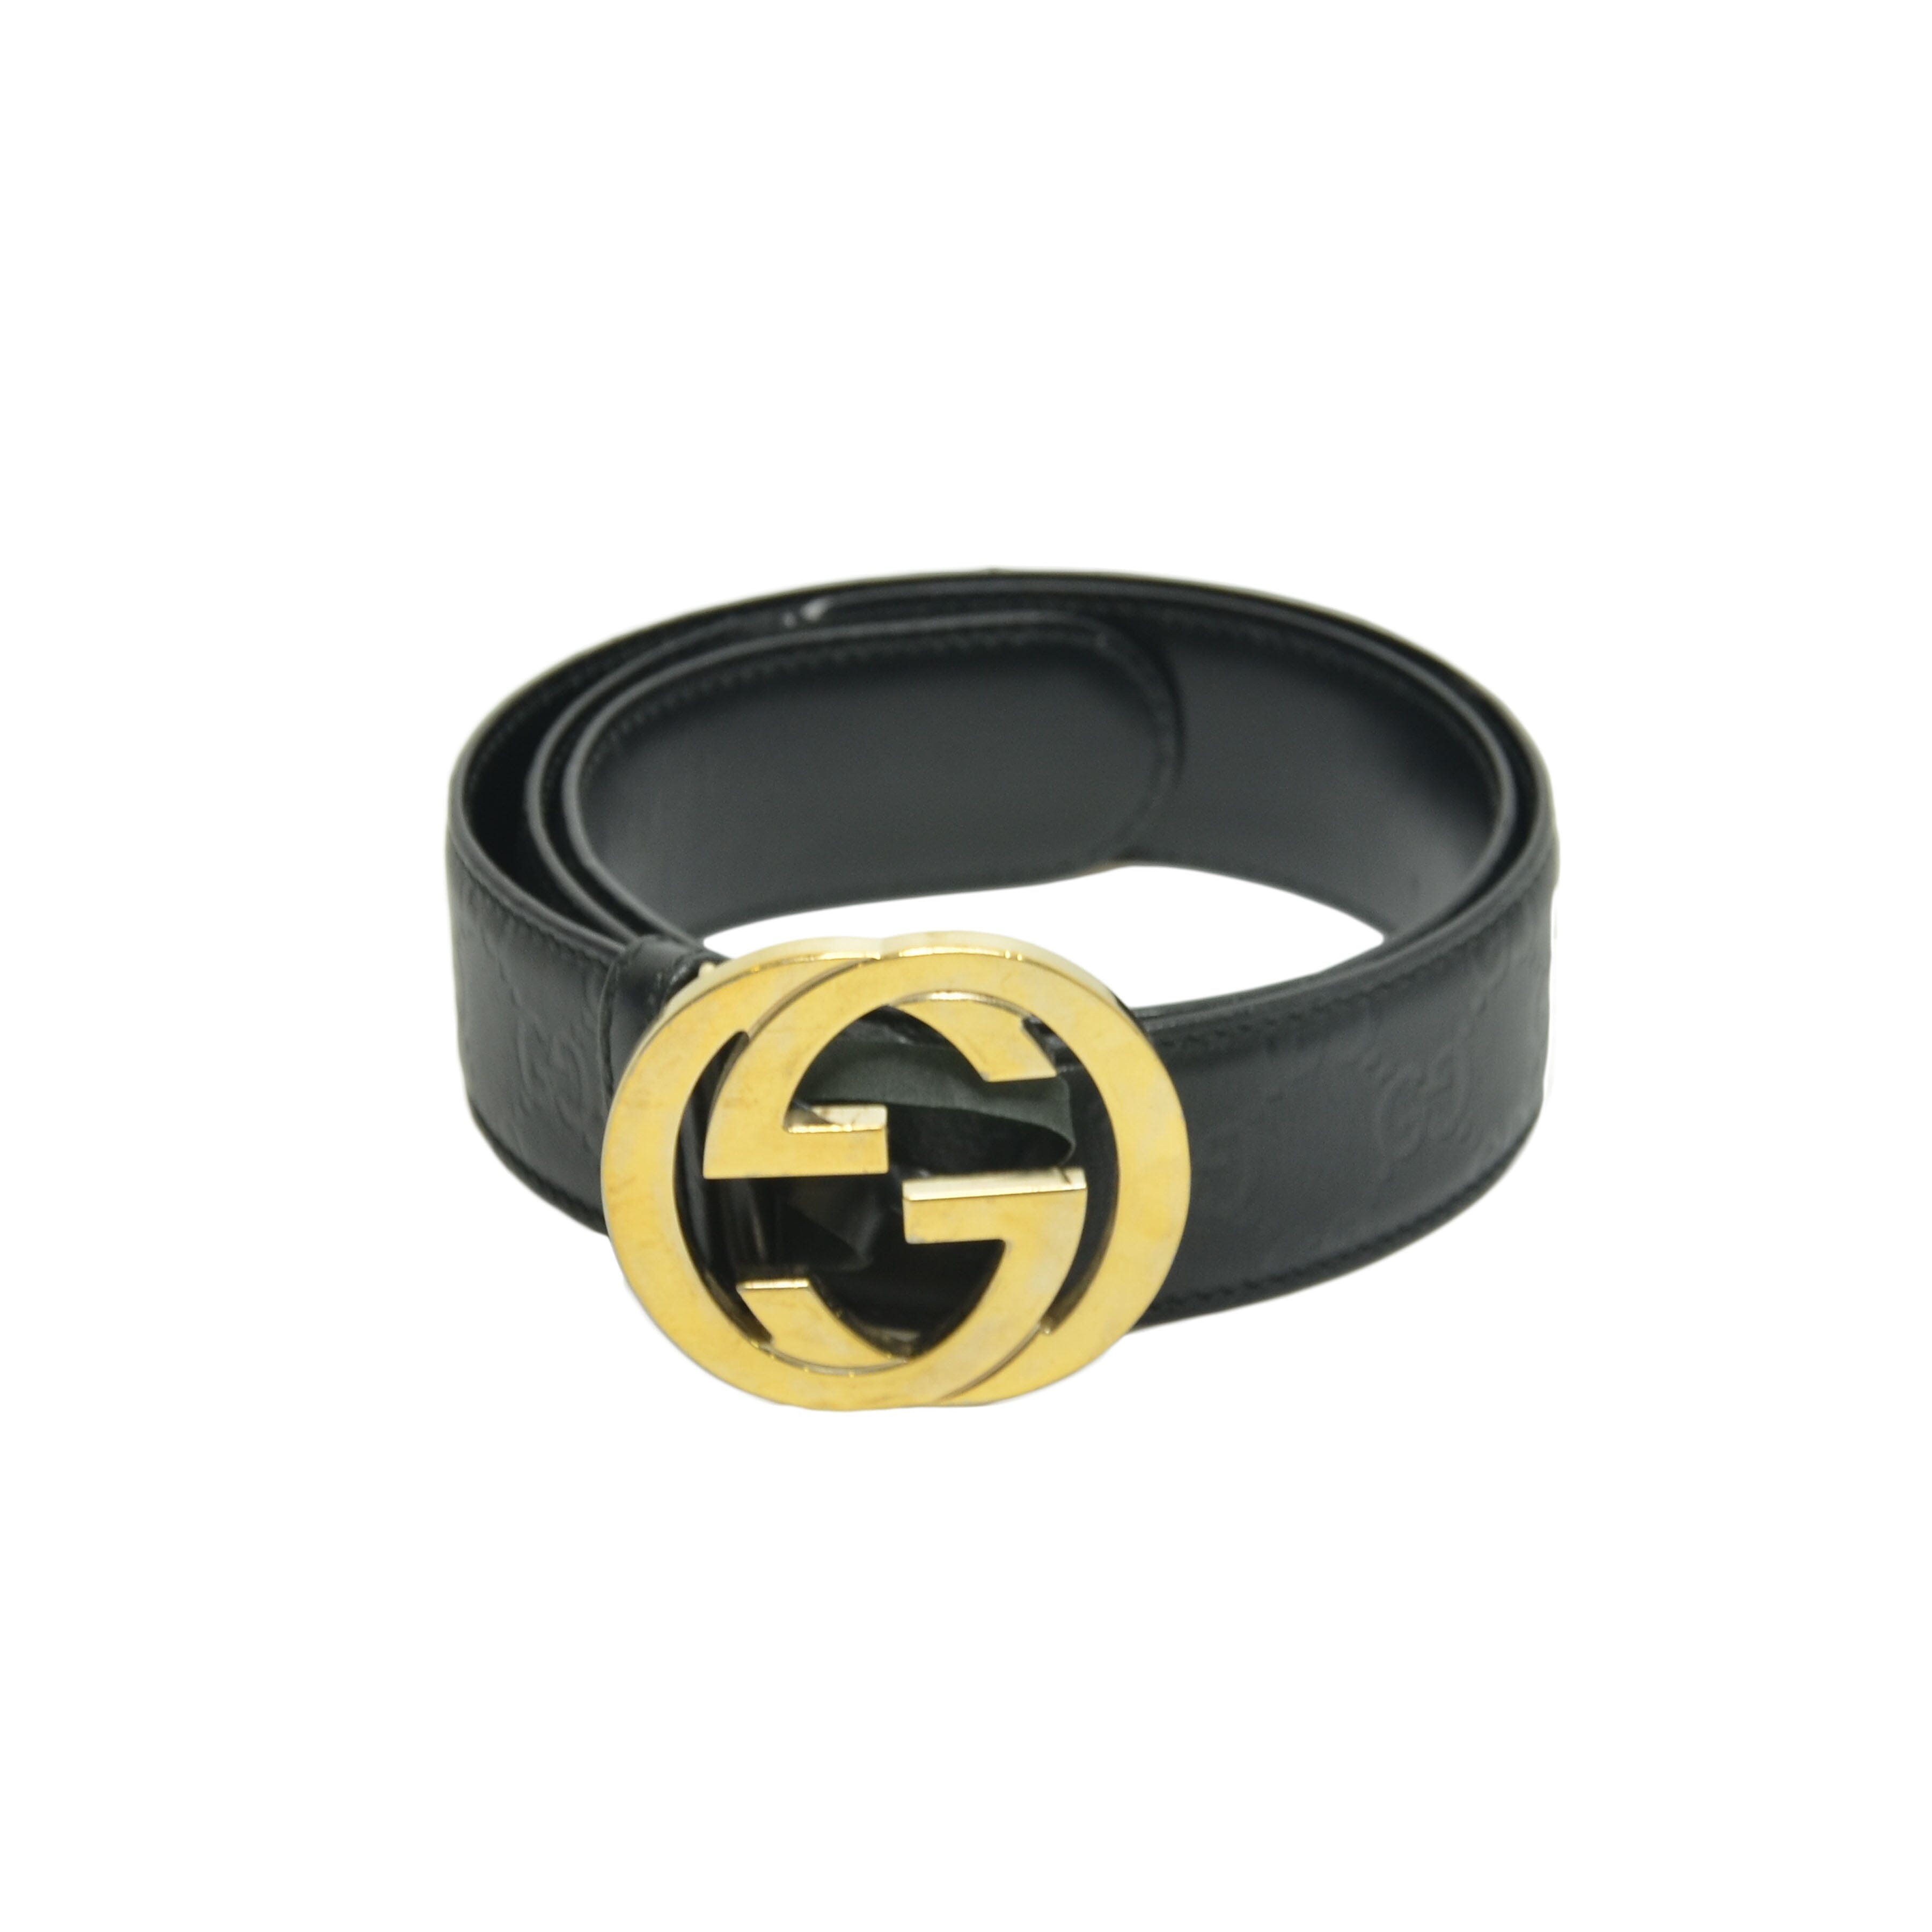 Black GG Signature Belt